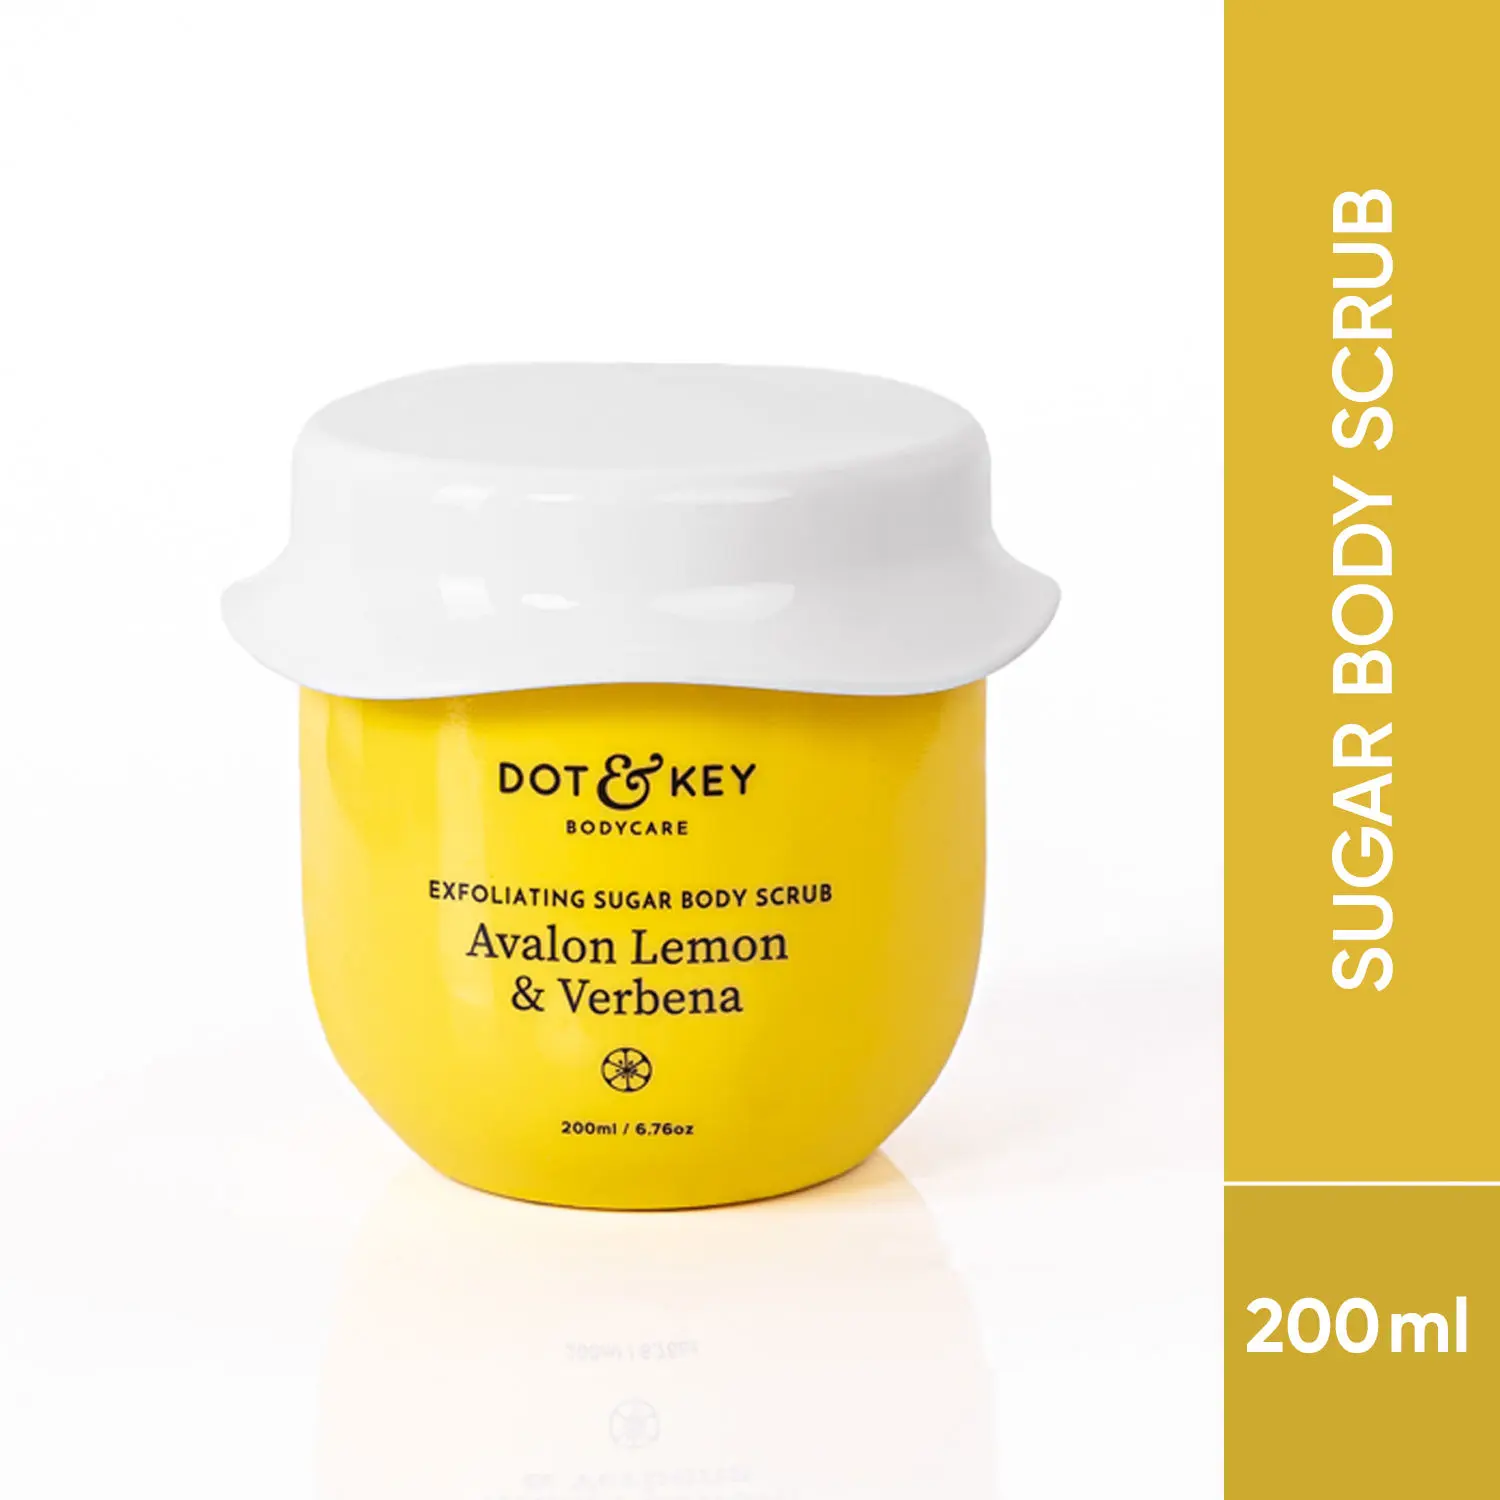 Dot & Key Exfoliating Sugar Body Scrub Avalon Lemon & Verbena (200 ml)